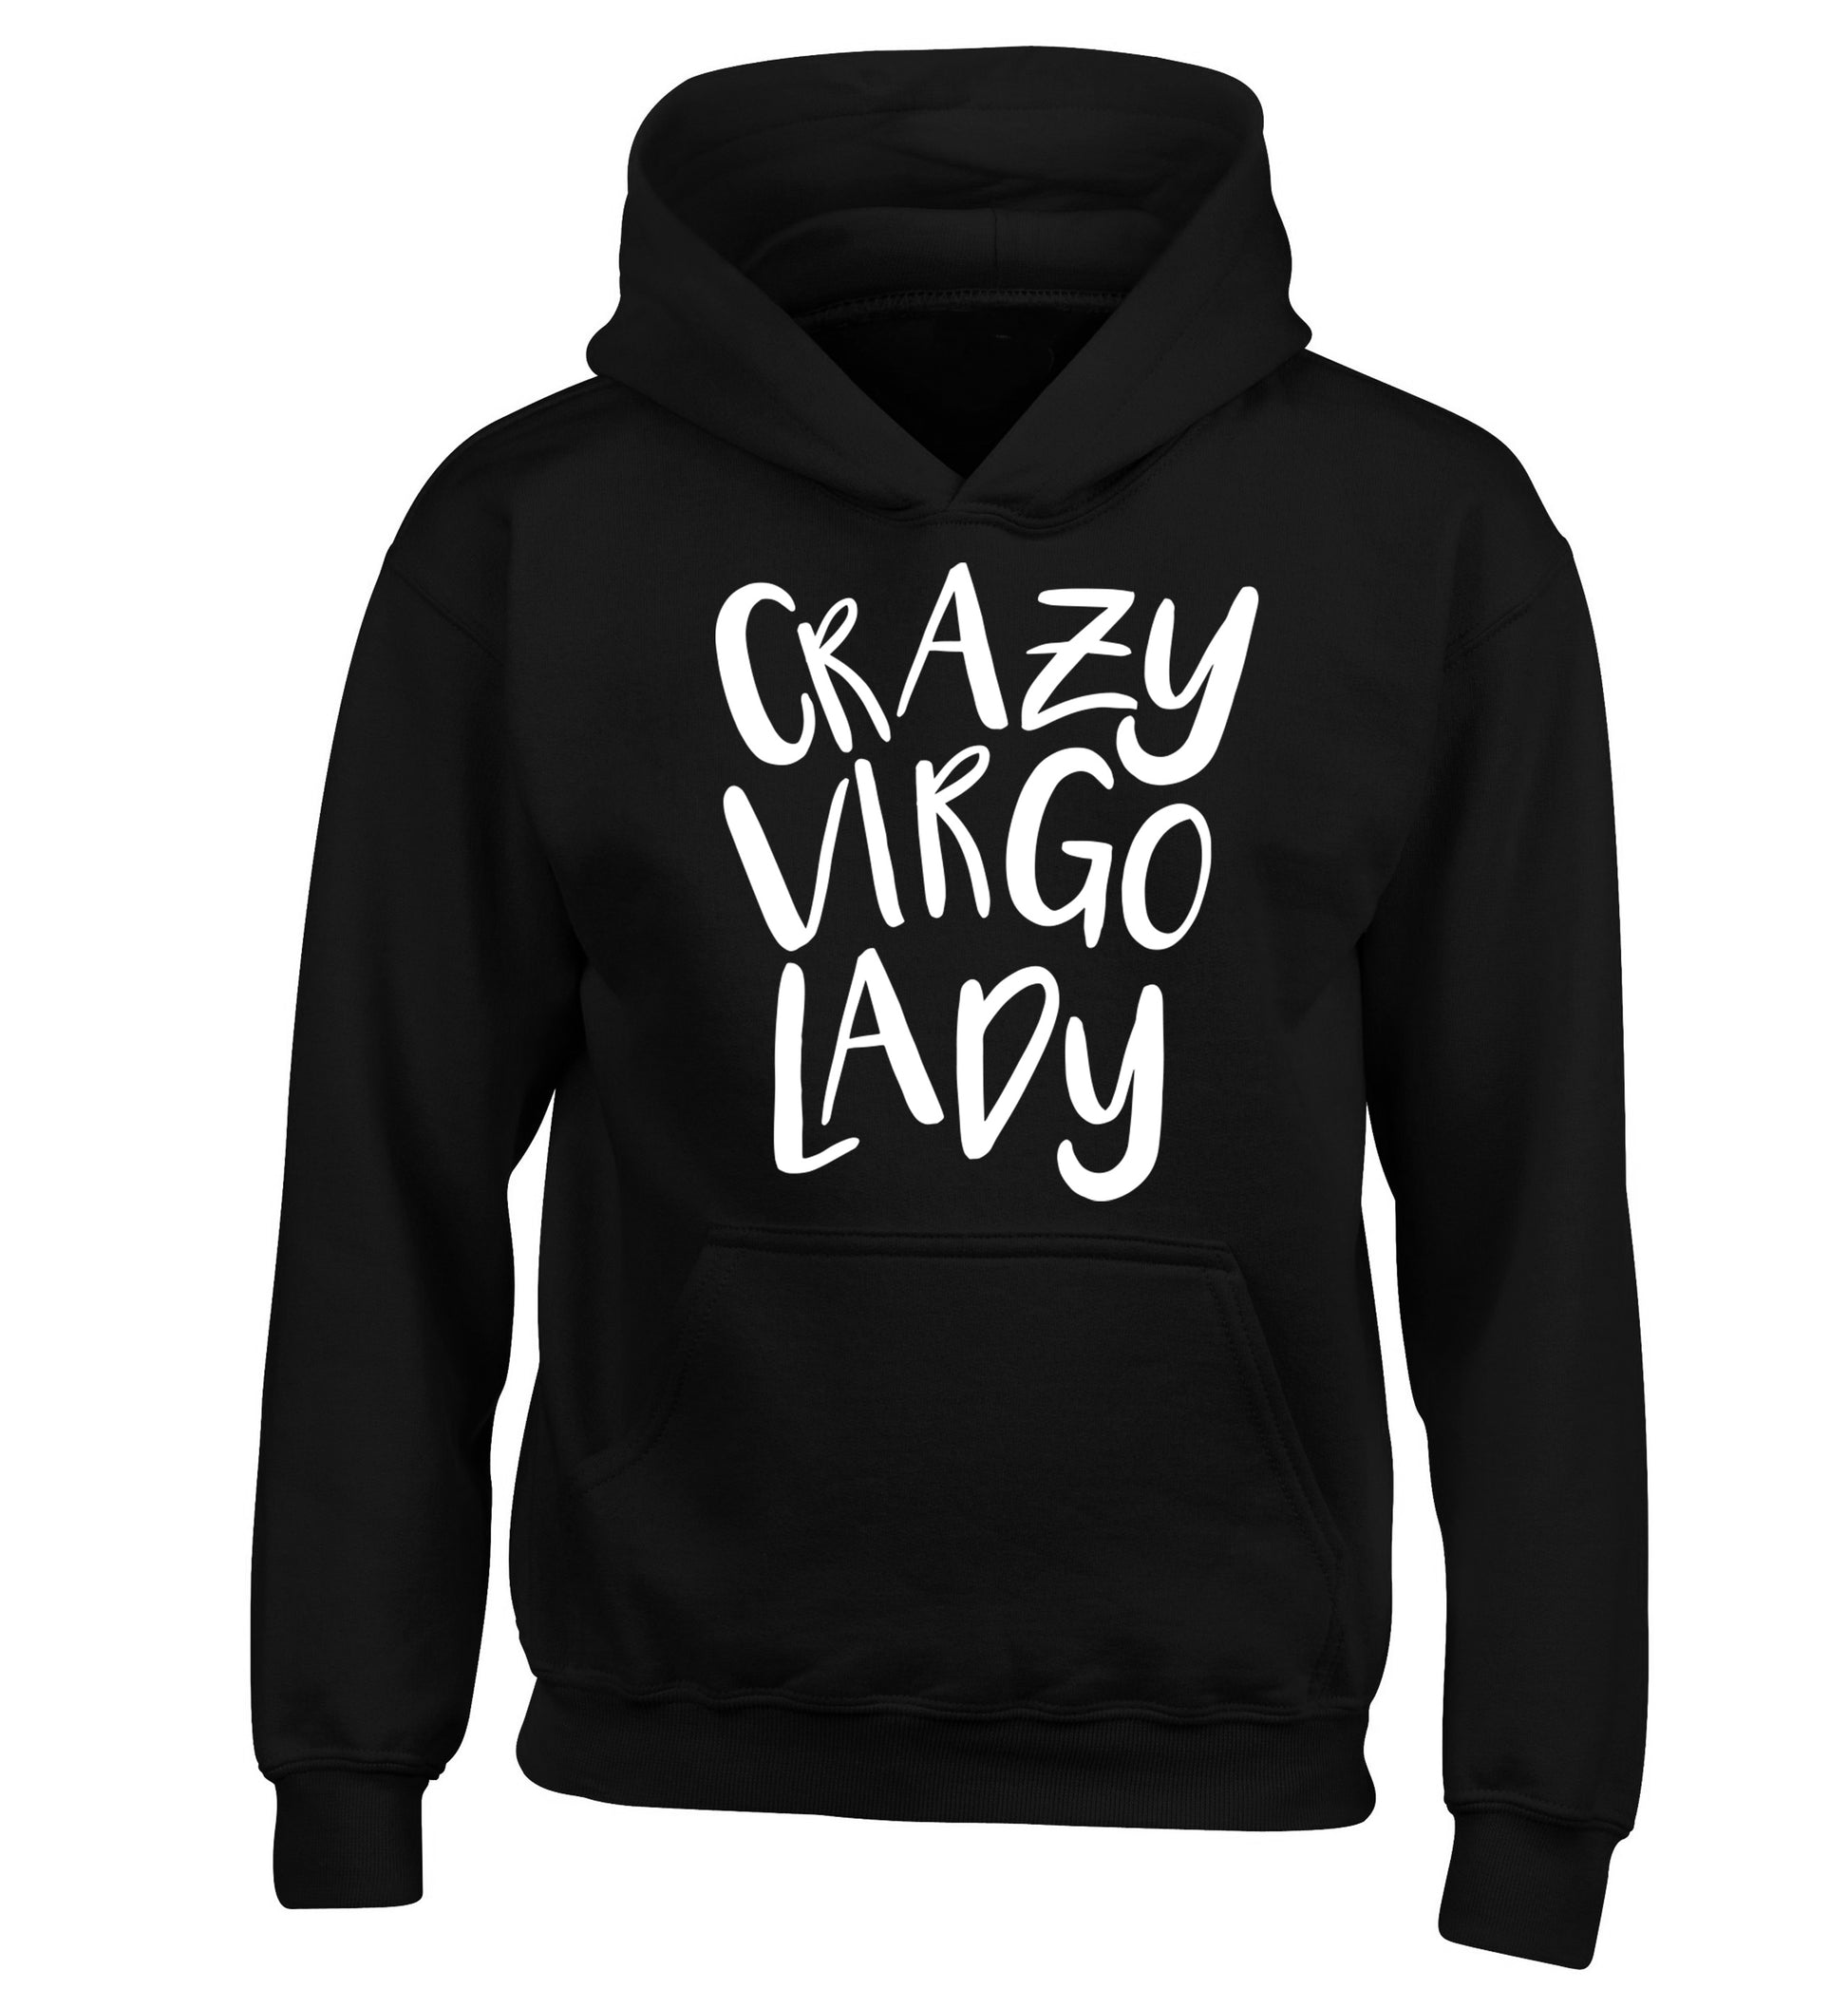 Crazy virgo lady children's black hoodie 12-13 Years